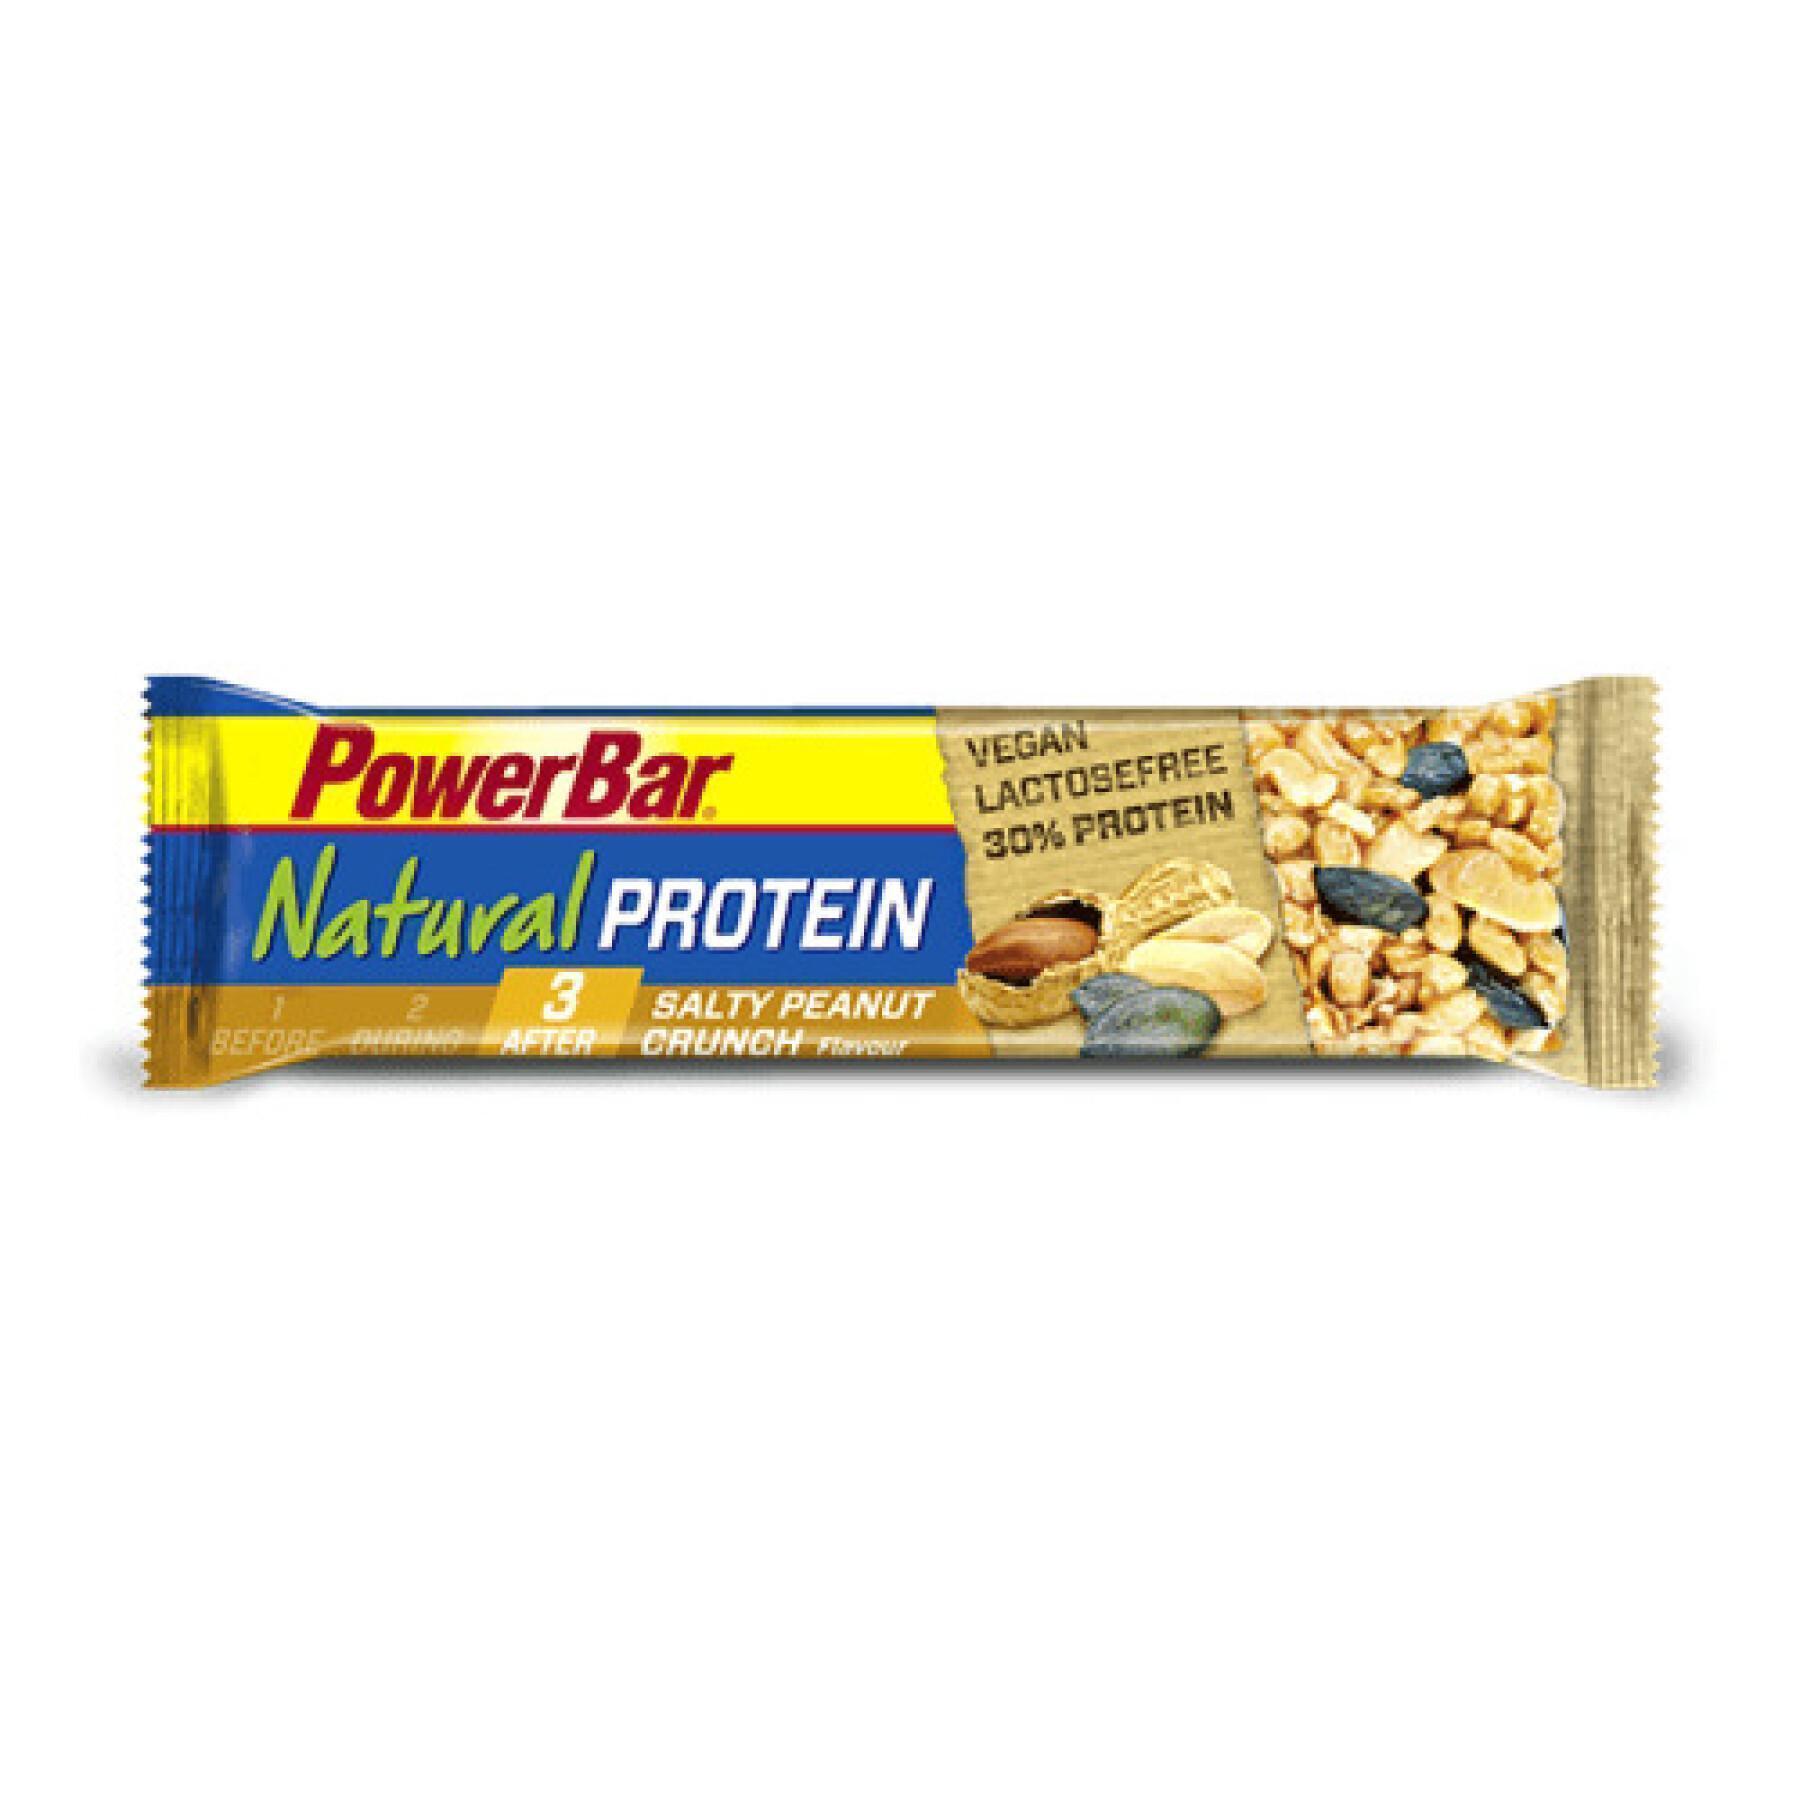 Lote de 24 bares PowerBar Natural Protein Vegan - Salty Peanut Crunch